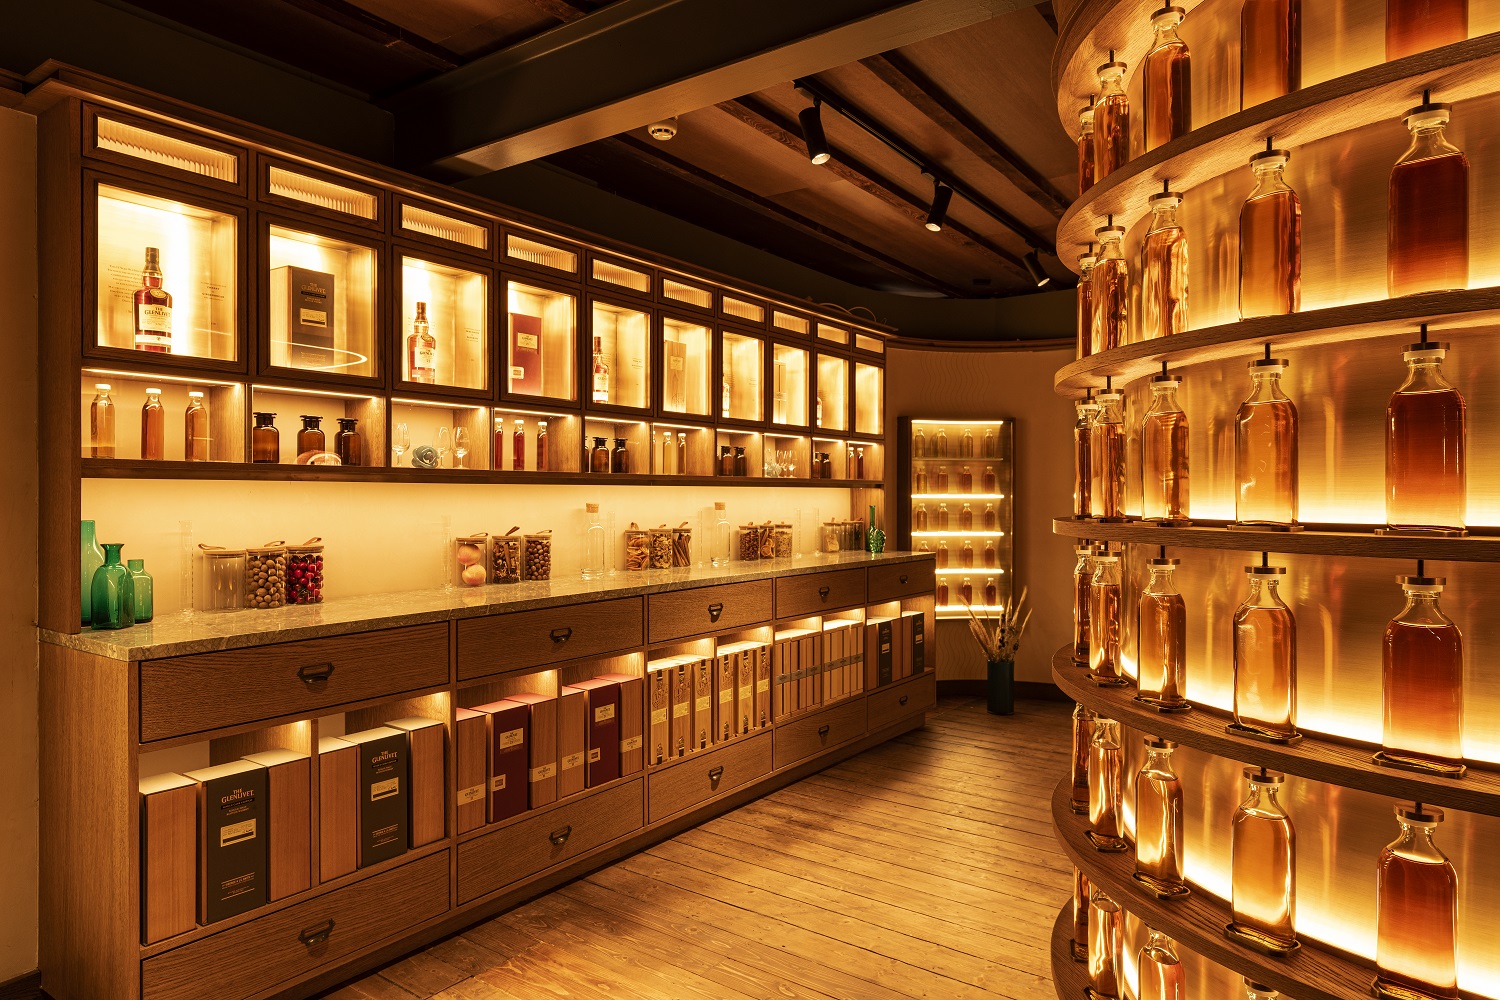 The Glenlivet archives hold some of the distillery's rarest whiskies